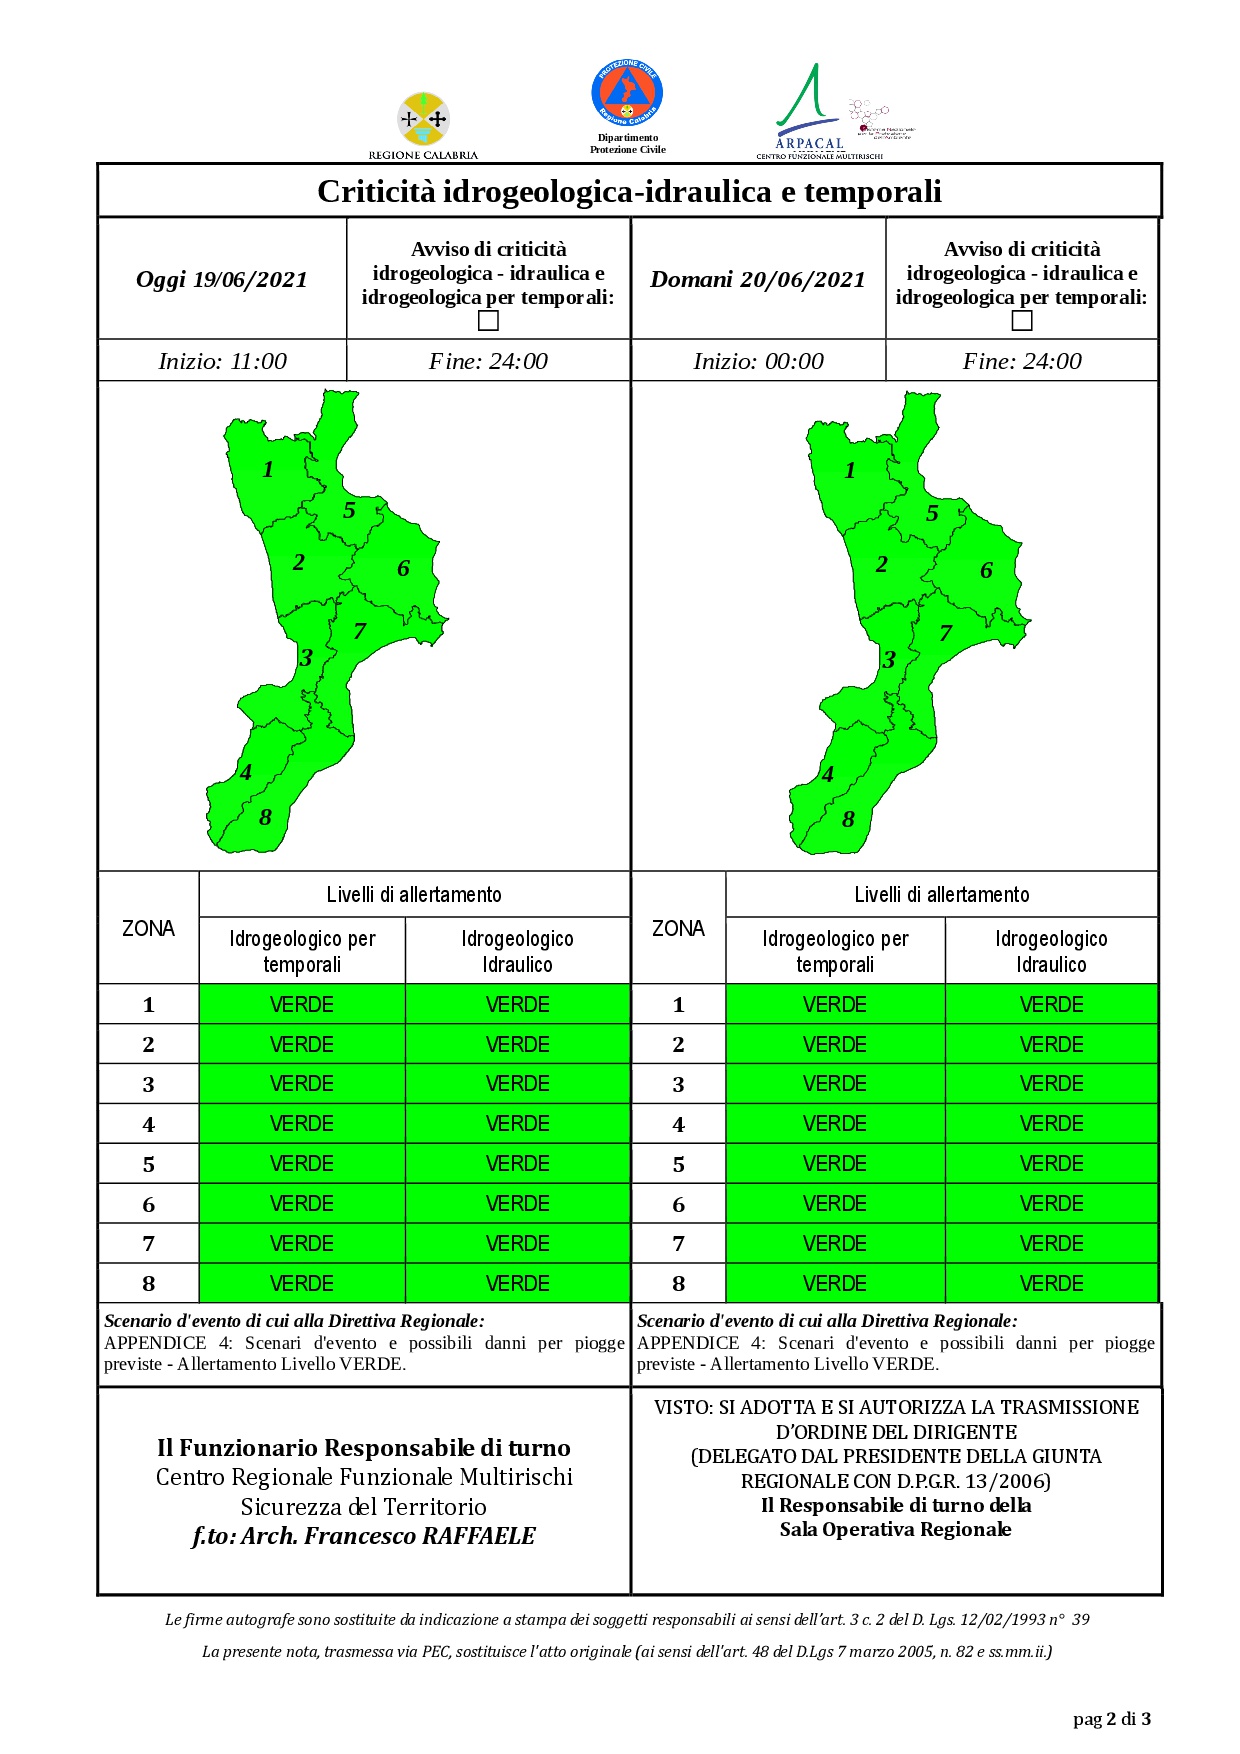 Criticità idrogeologica-idraulica e temporali in Calabria 19-06-2021